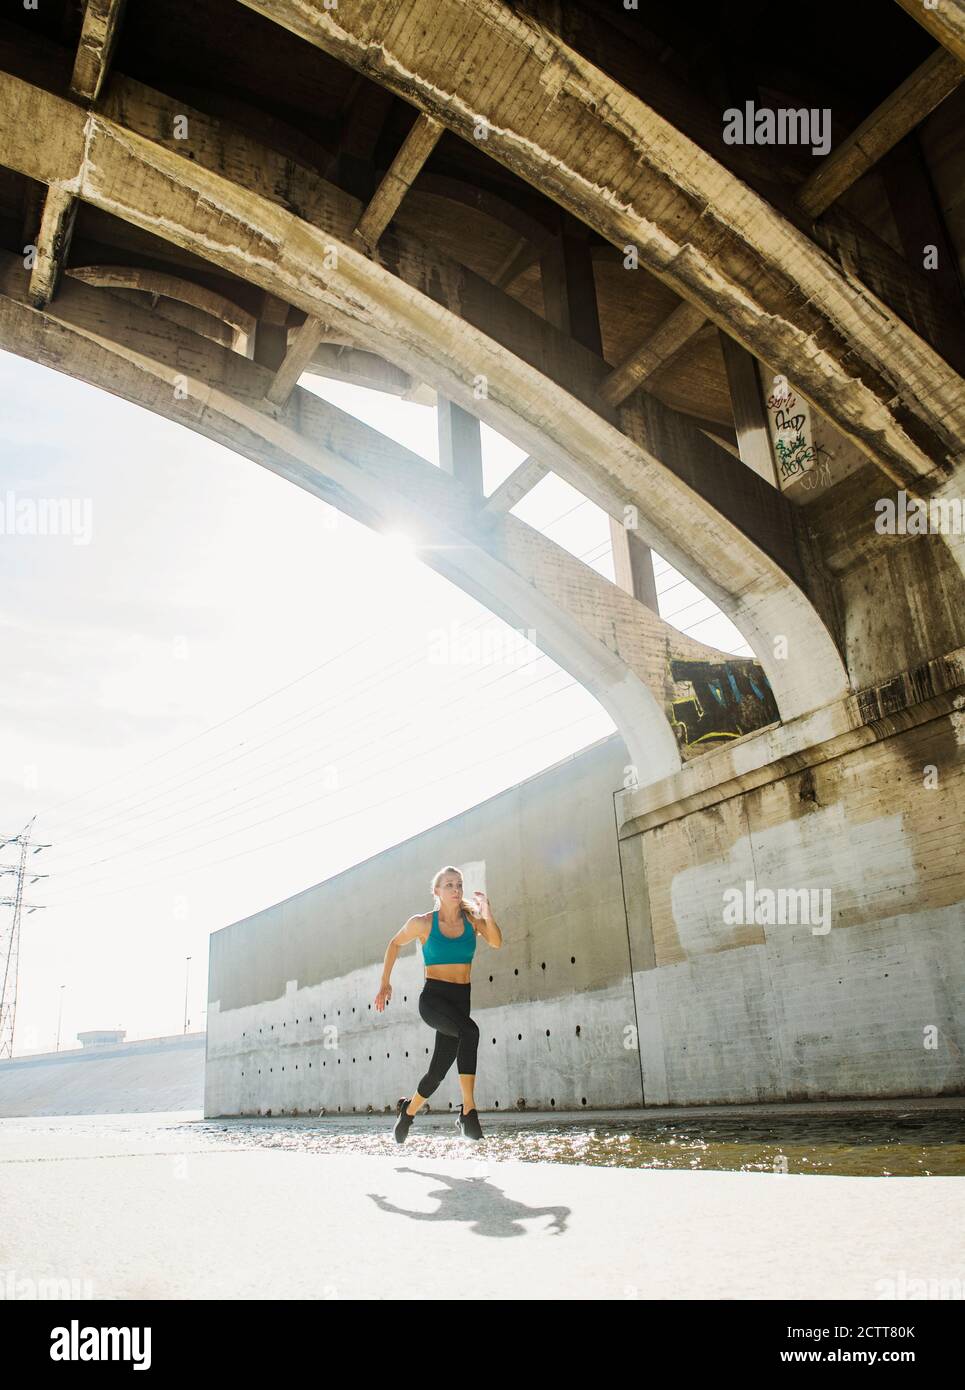 USA, California, Los Angeles, Sporty woman running underneath bridge Stock Photo